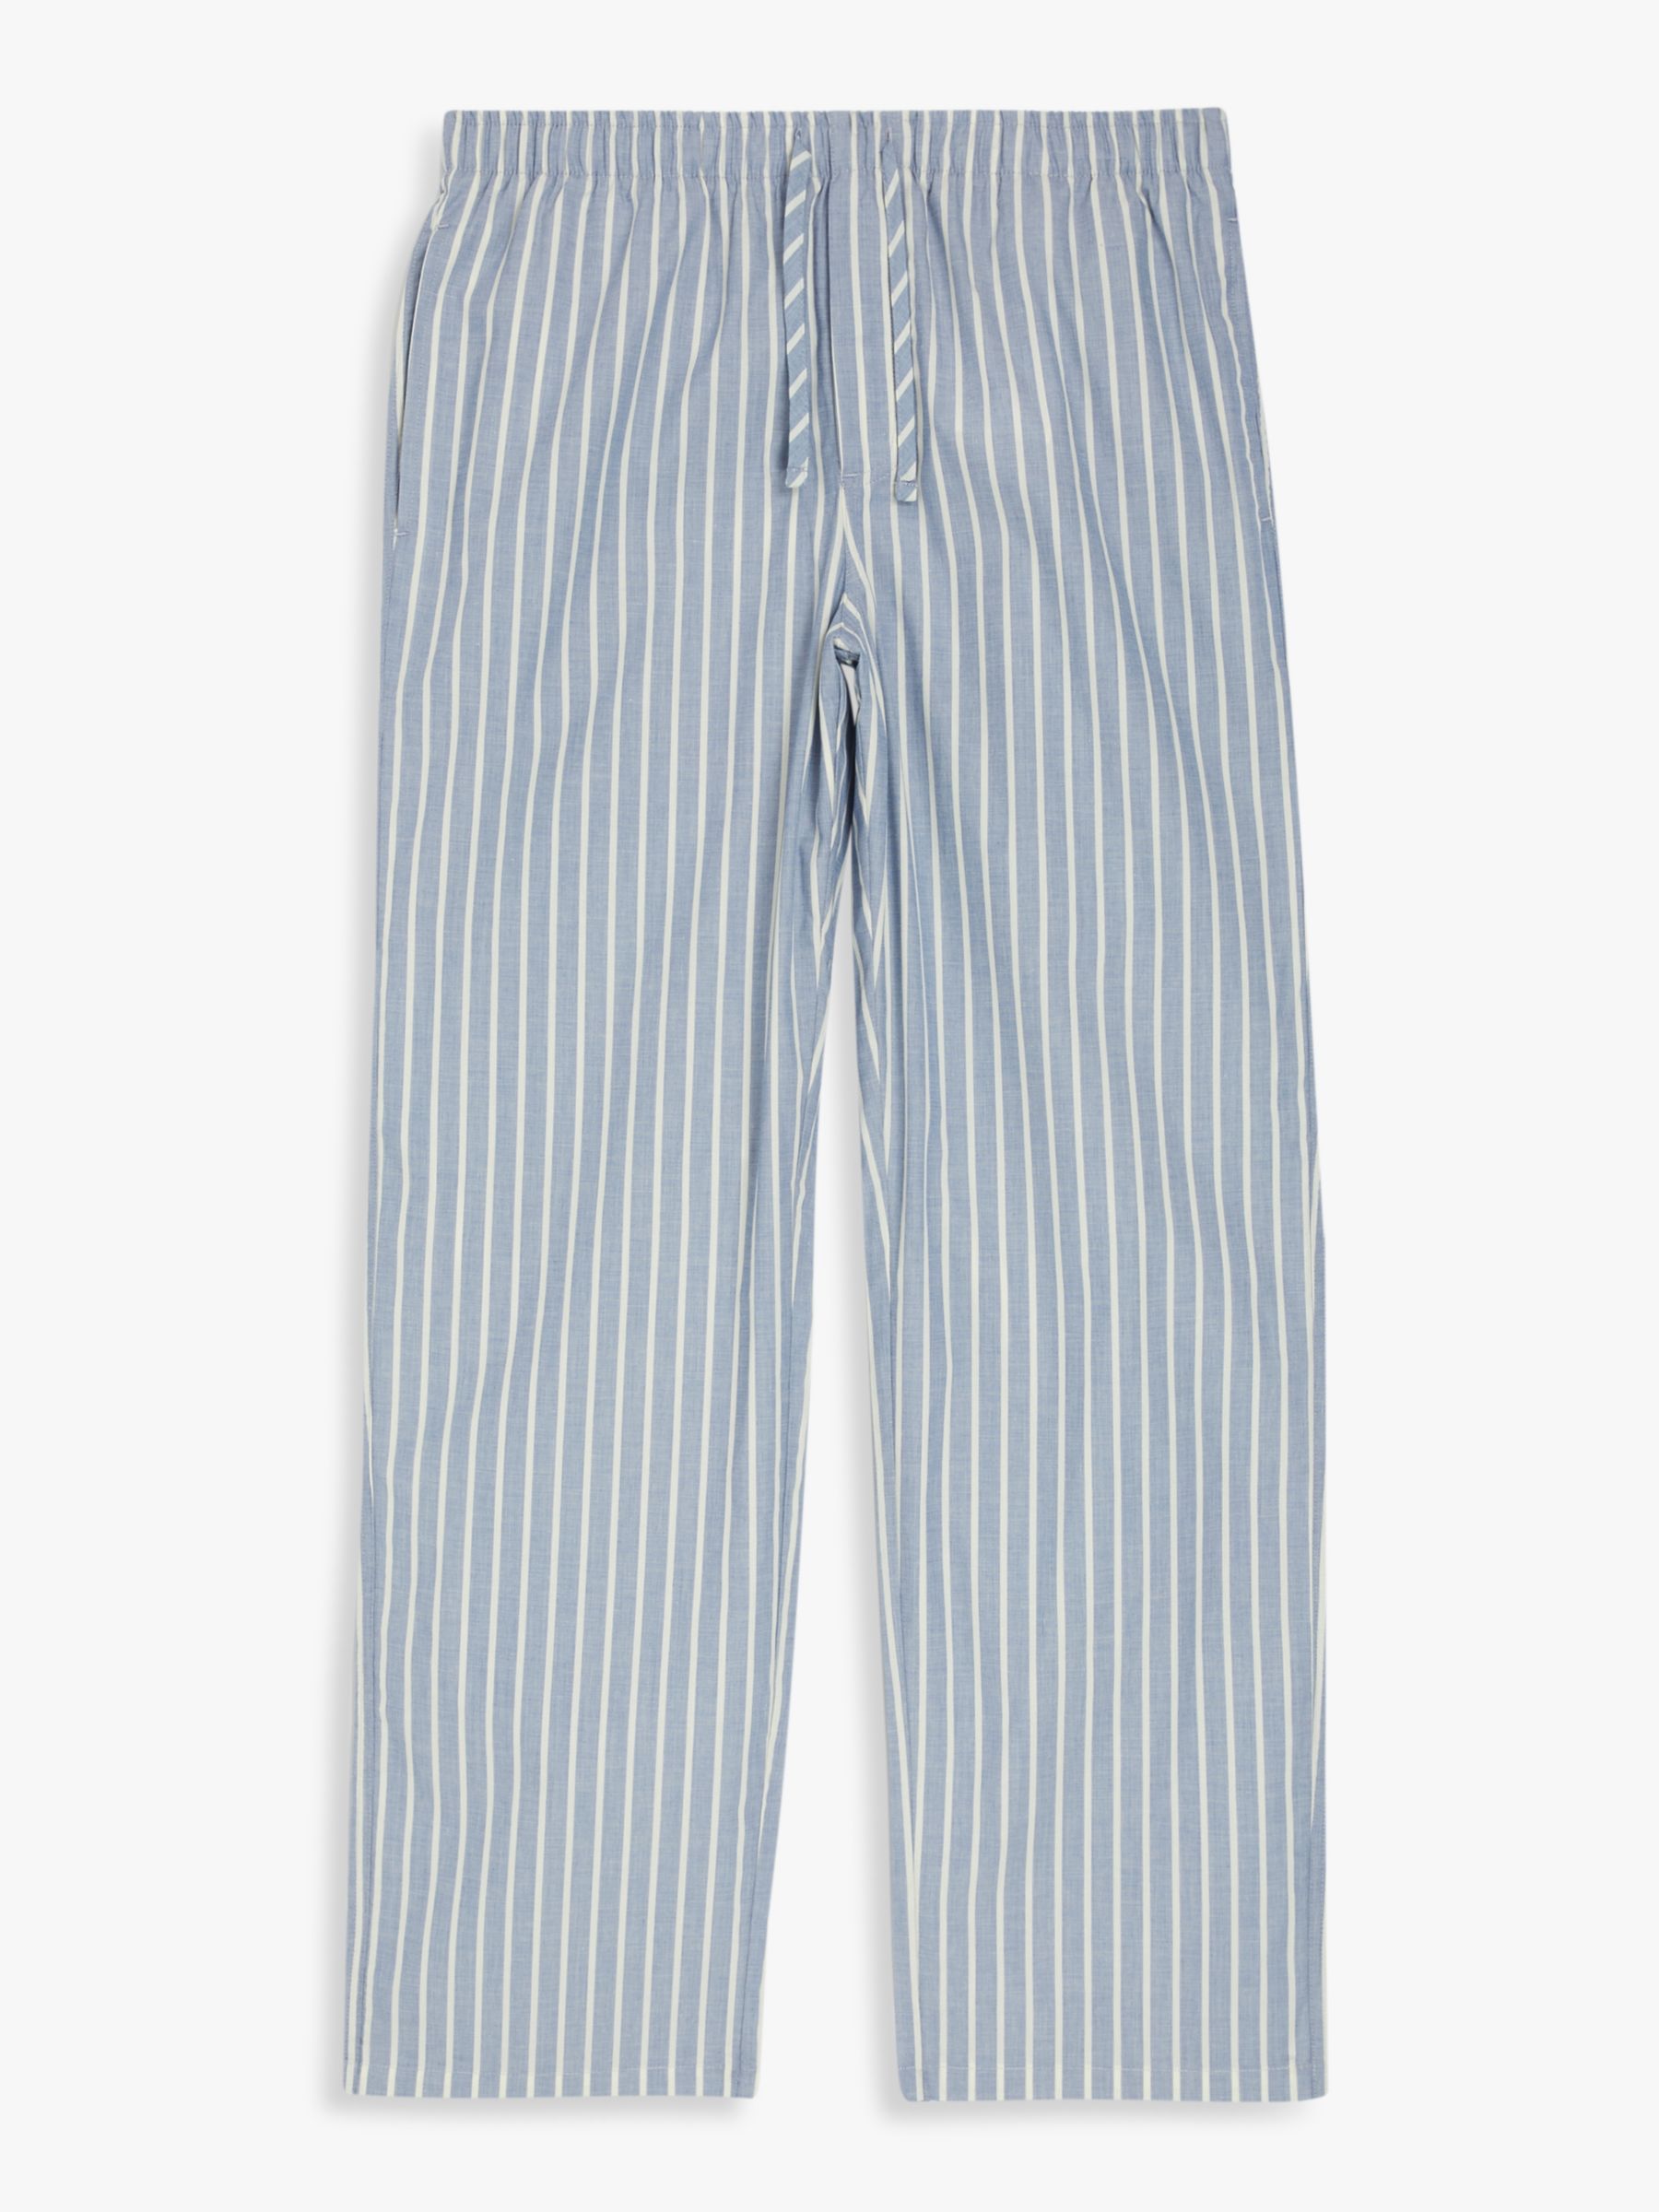 John Lewis Organic Cotton Poplin Stripe Pyjama Bottoms, Blue, S